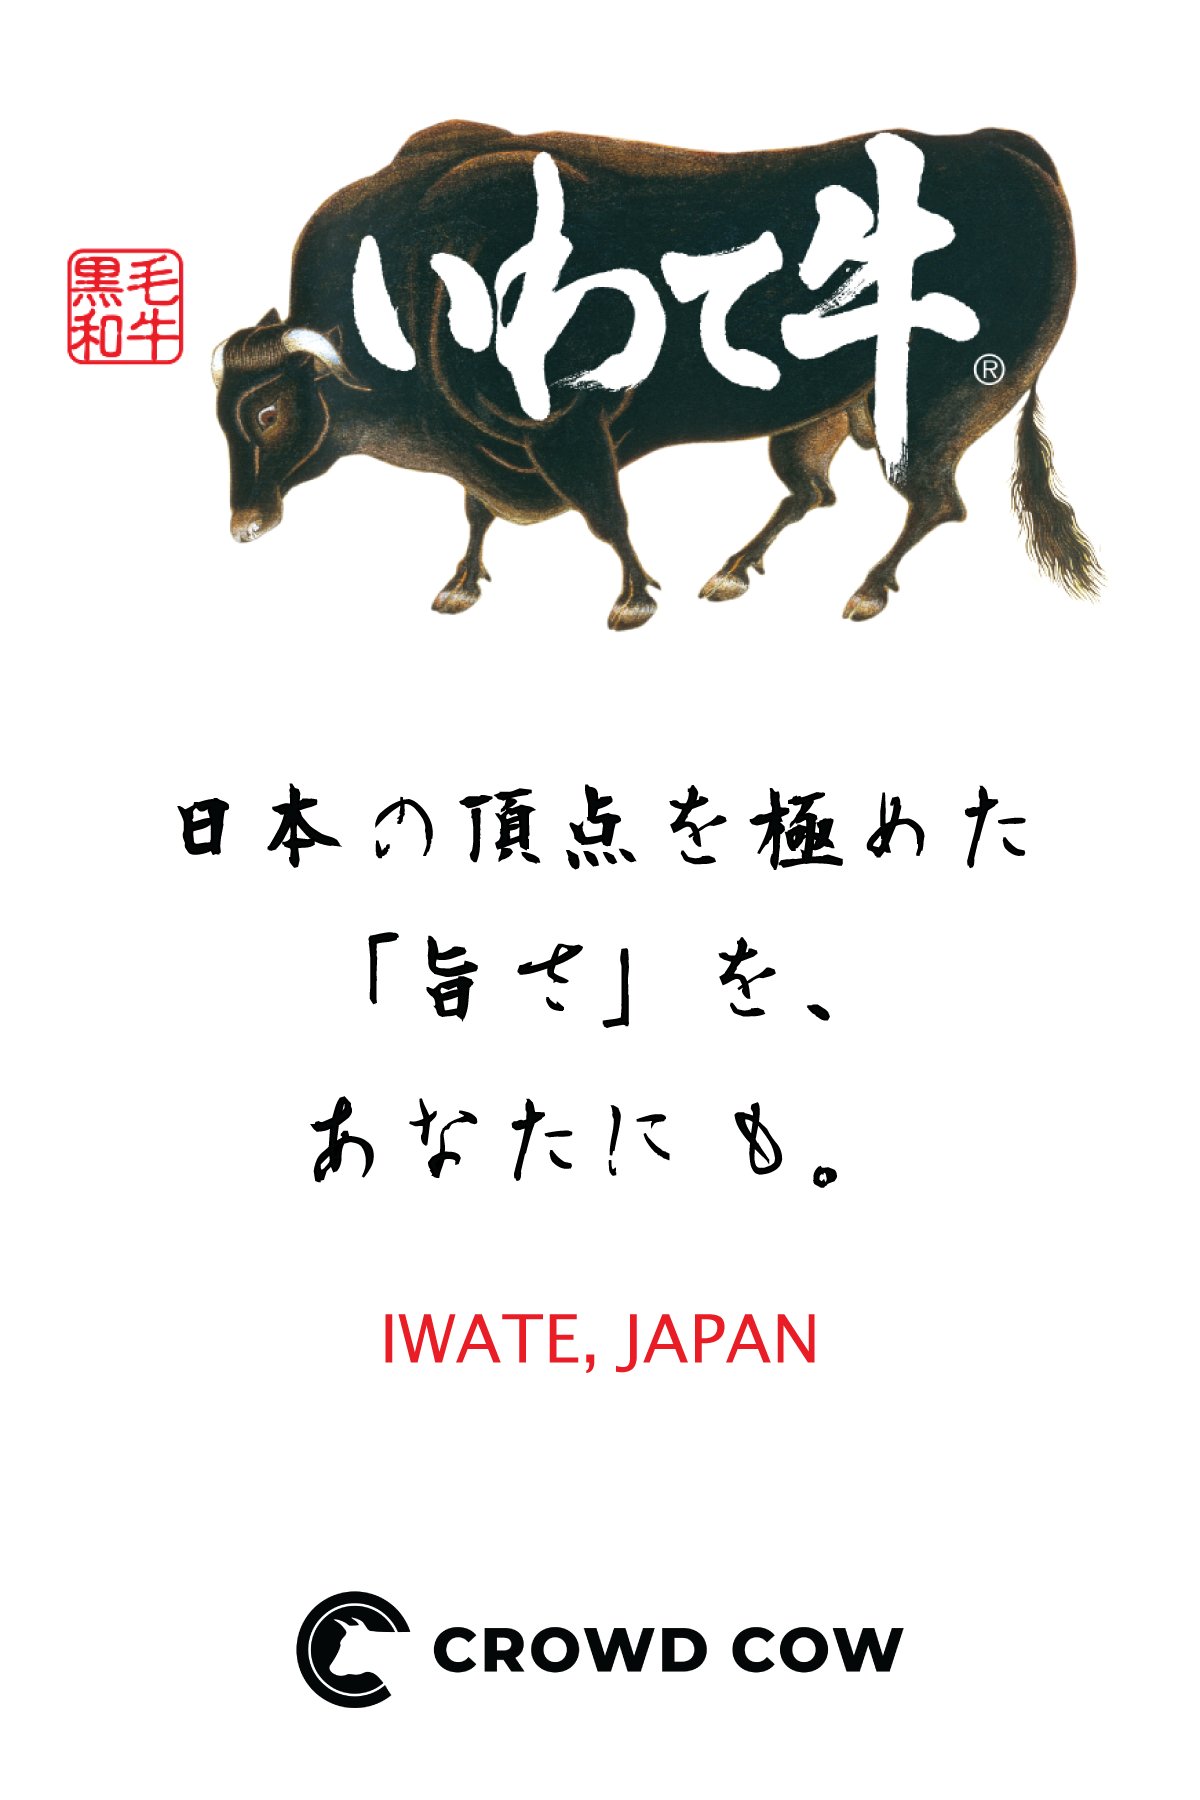 Iwate Wagyu